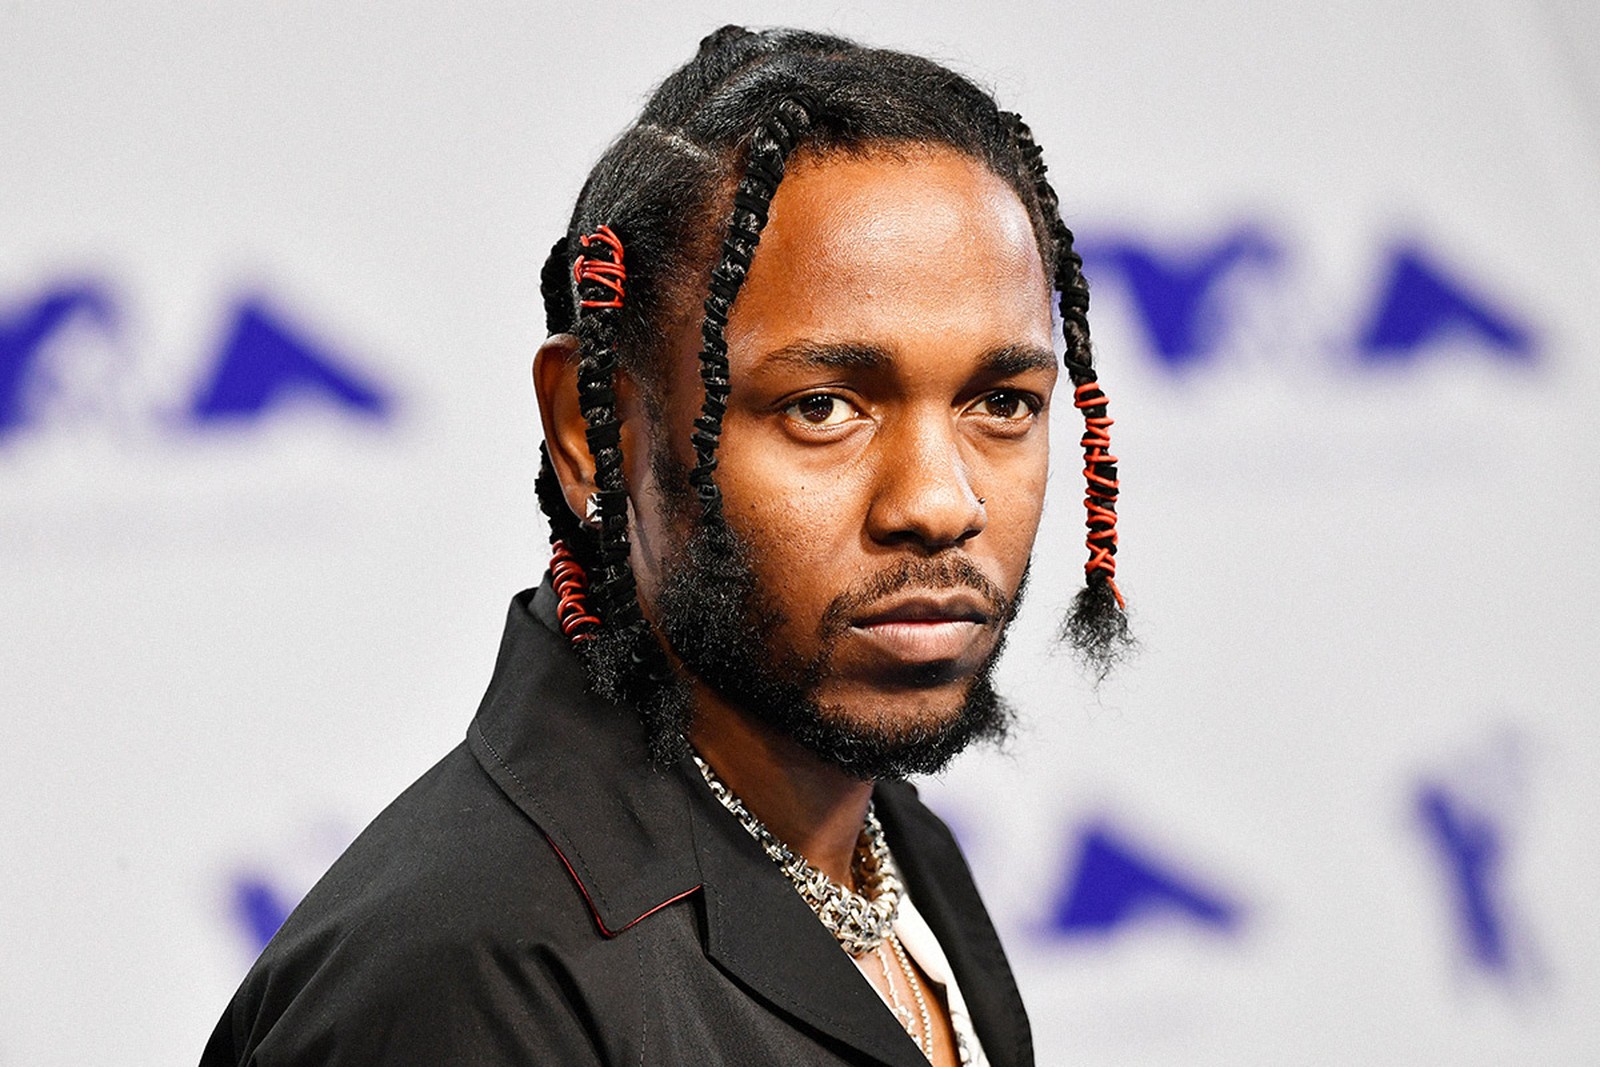 Kendrick Lamar's "GKMC" Album Had Highest Vinyl Sales Of Any Rap Album In 2021 17